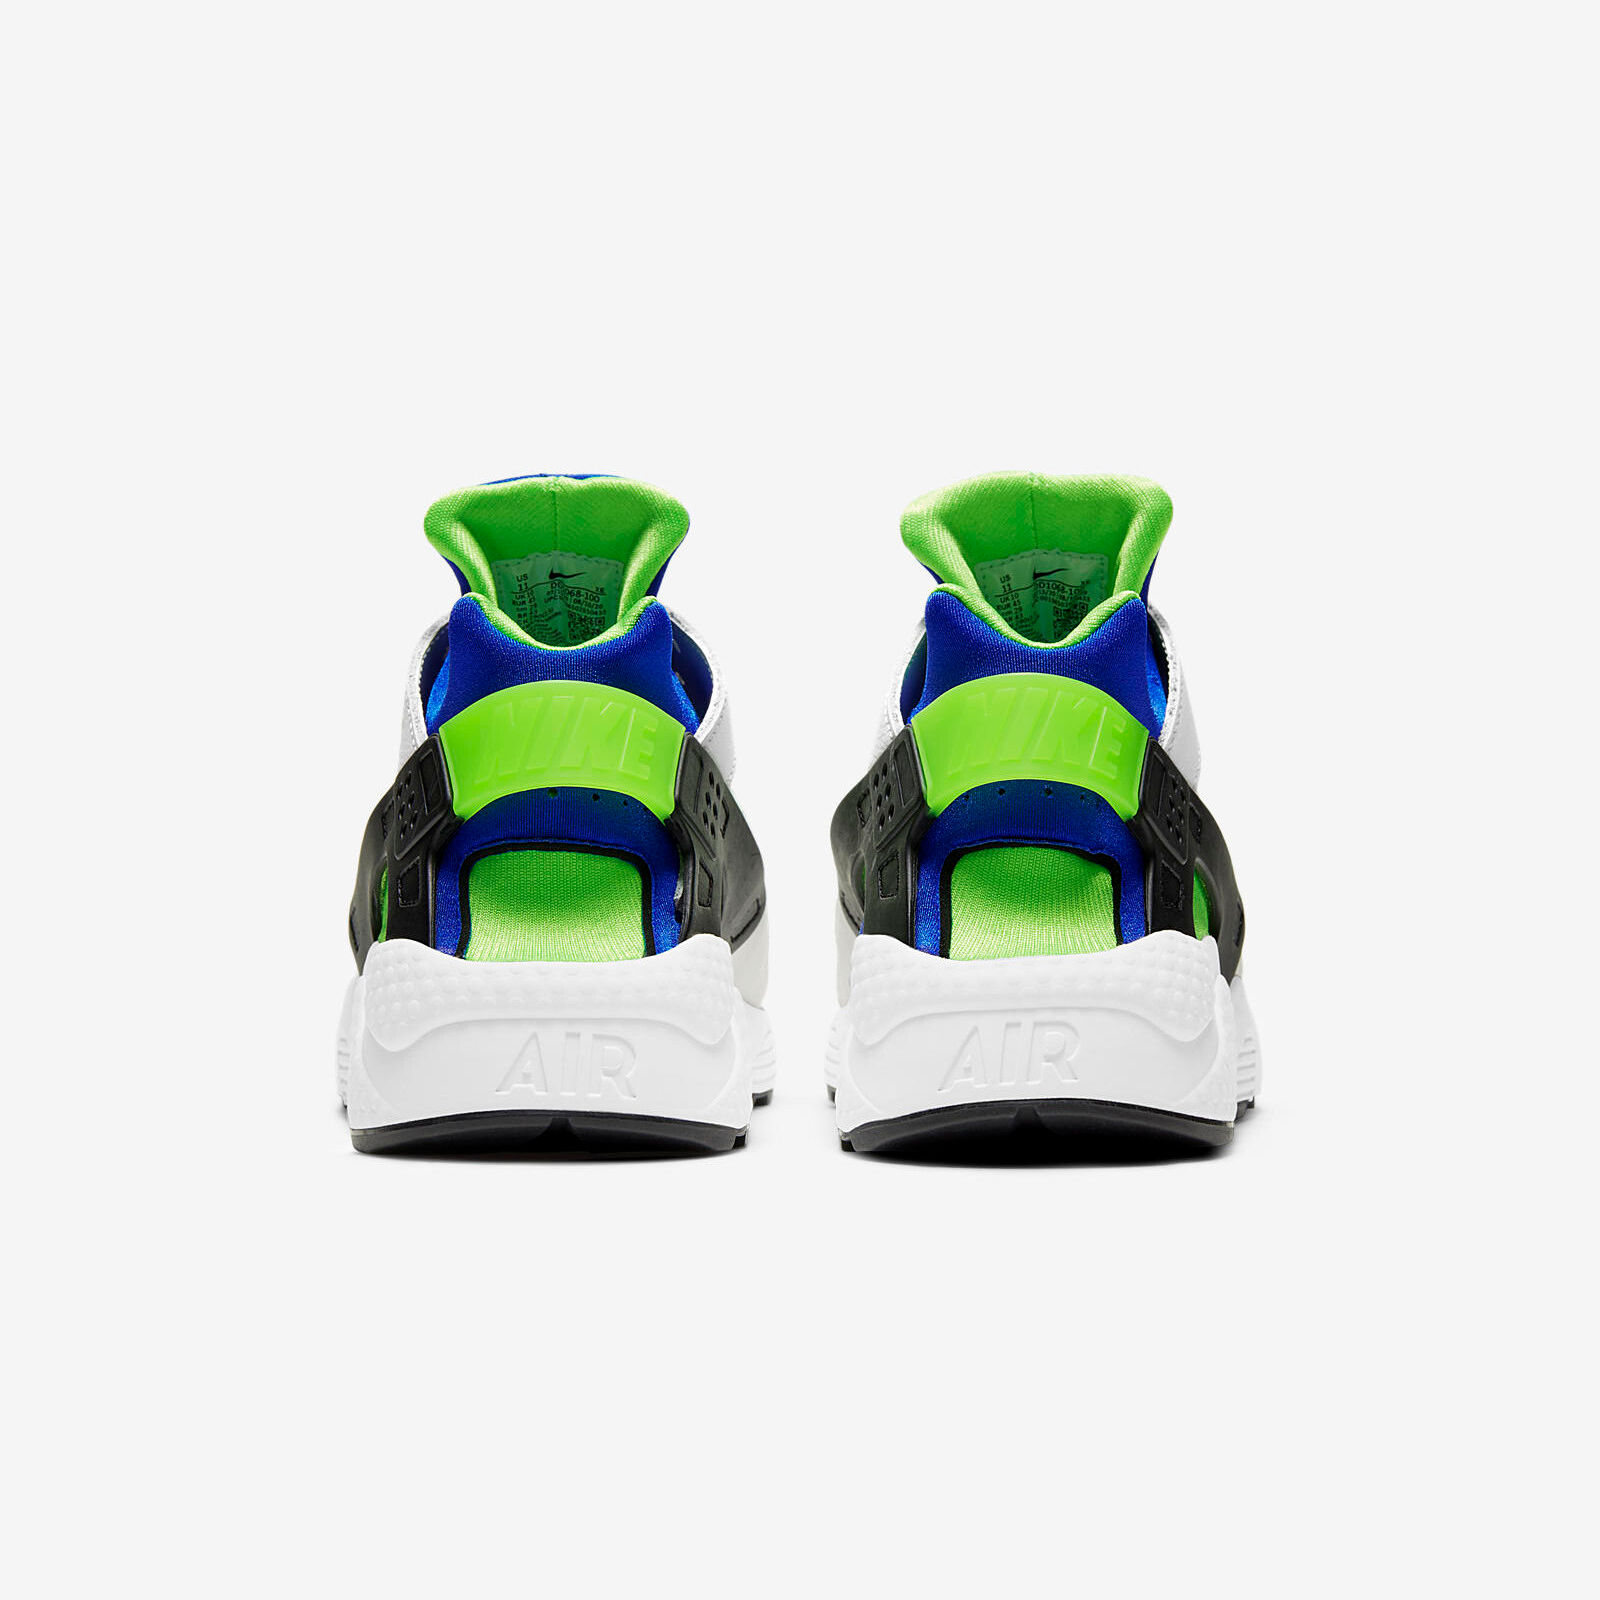 Nike Air Huarache OG
White / Green / Blue